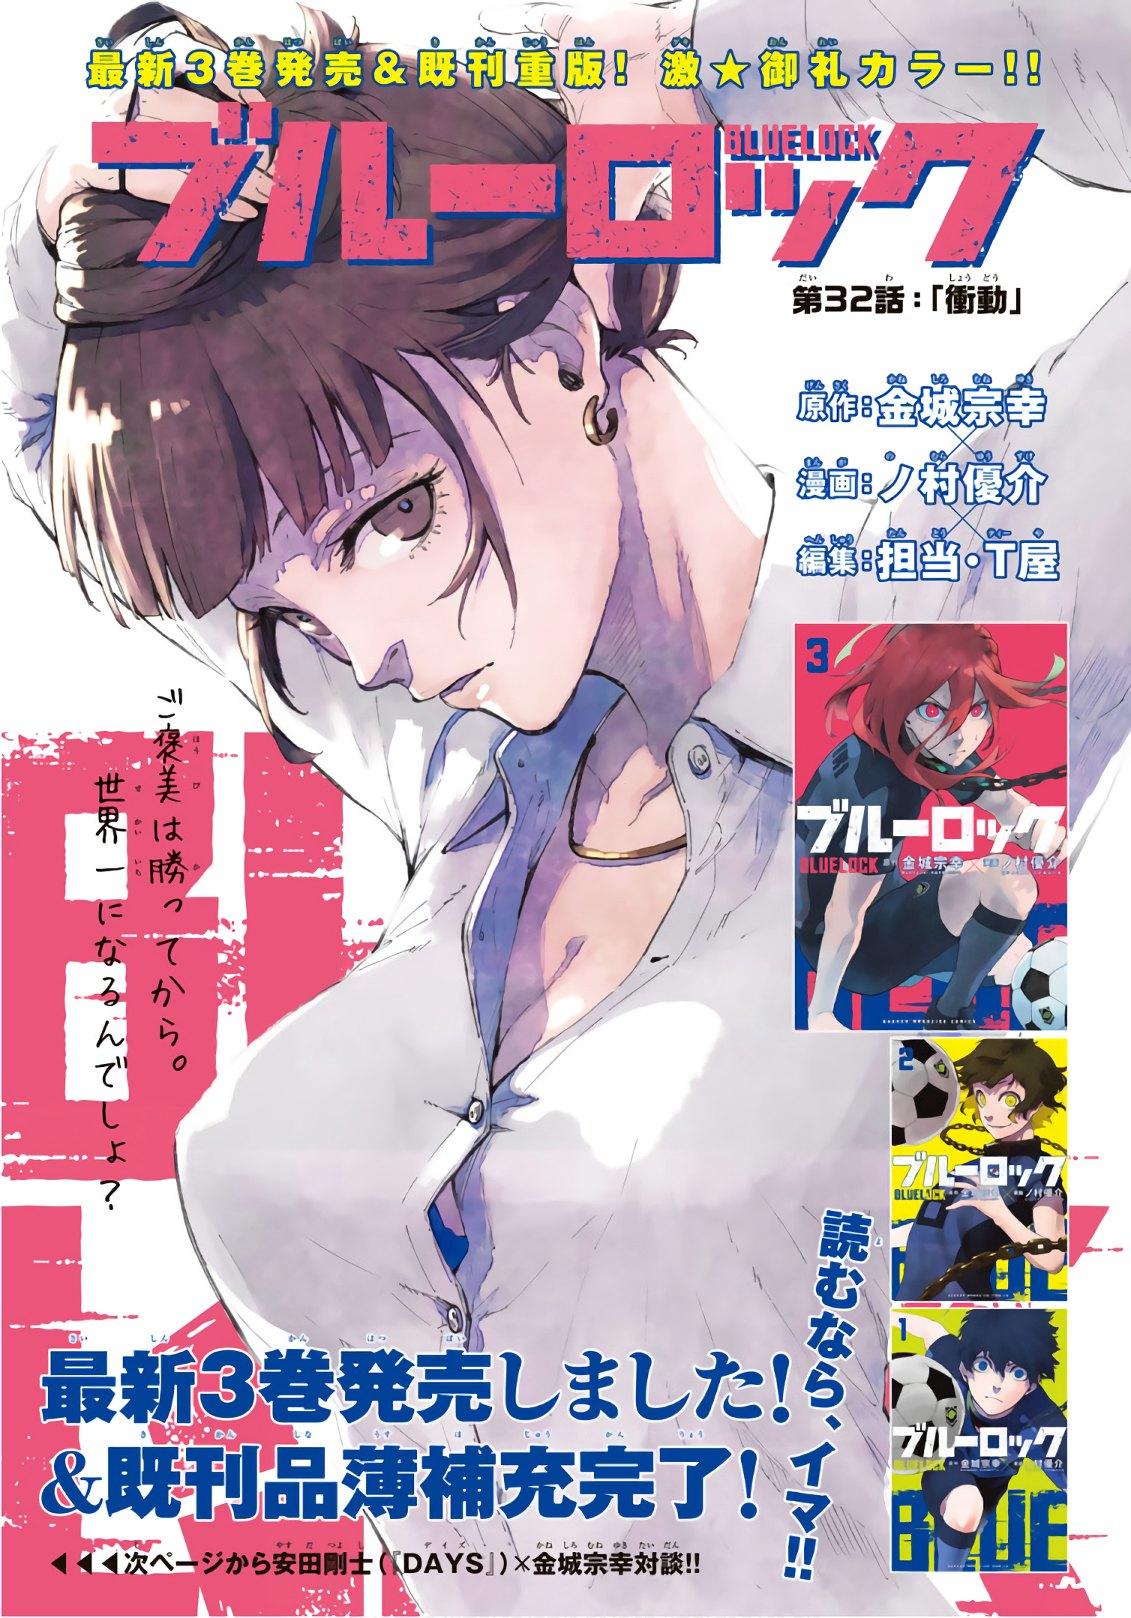 Blue Lock, Chapter 160 - Blue Lock Manga Online